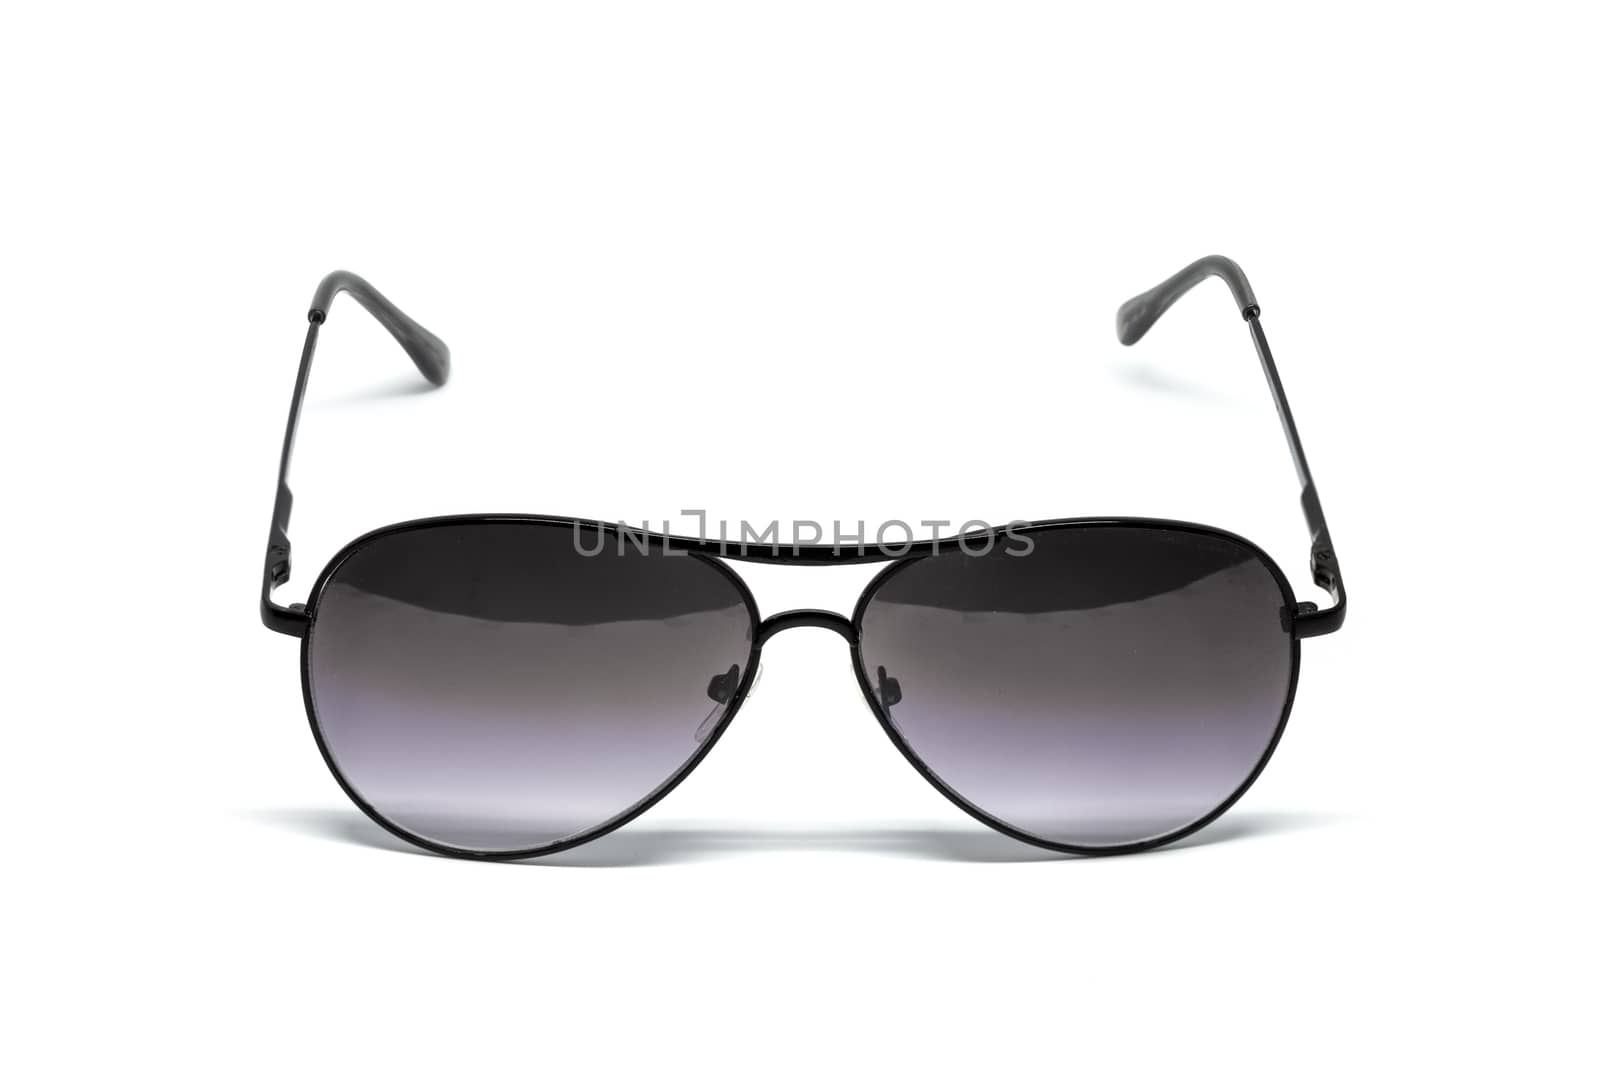 Black sunglasses isolated by Natstocker